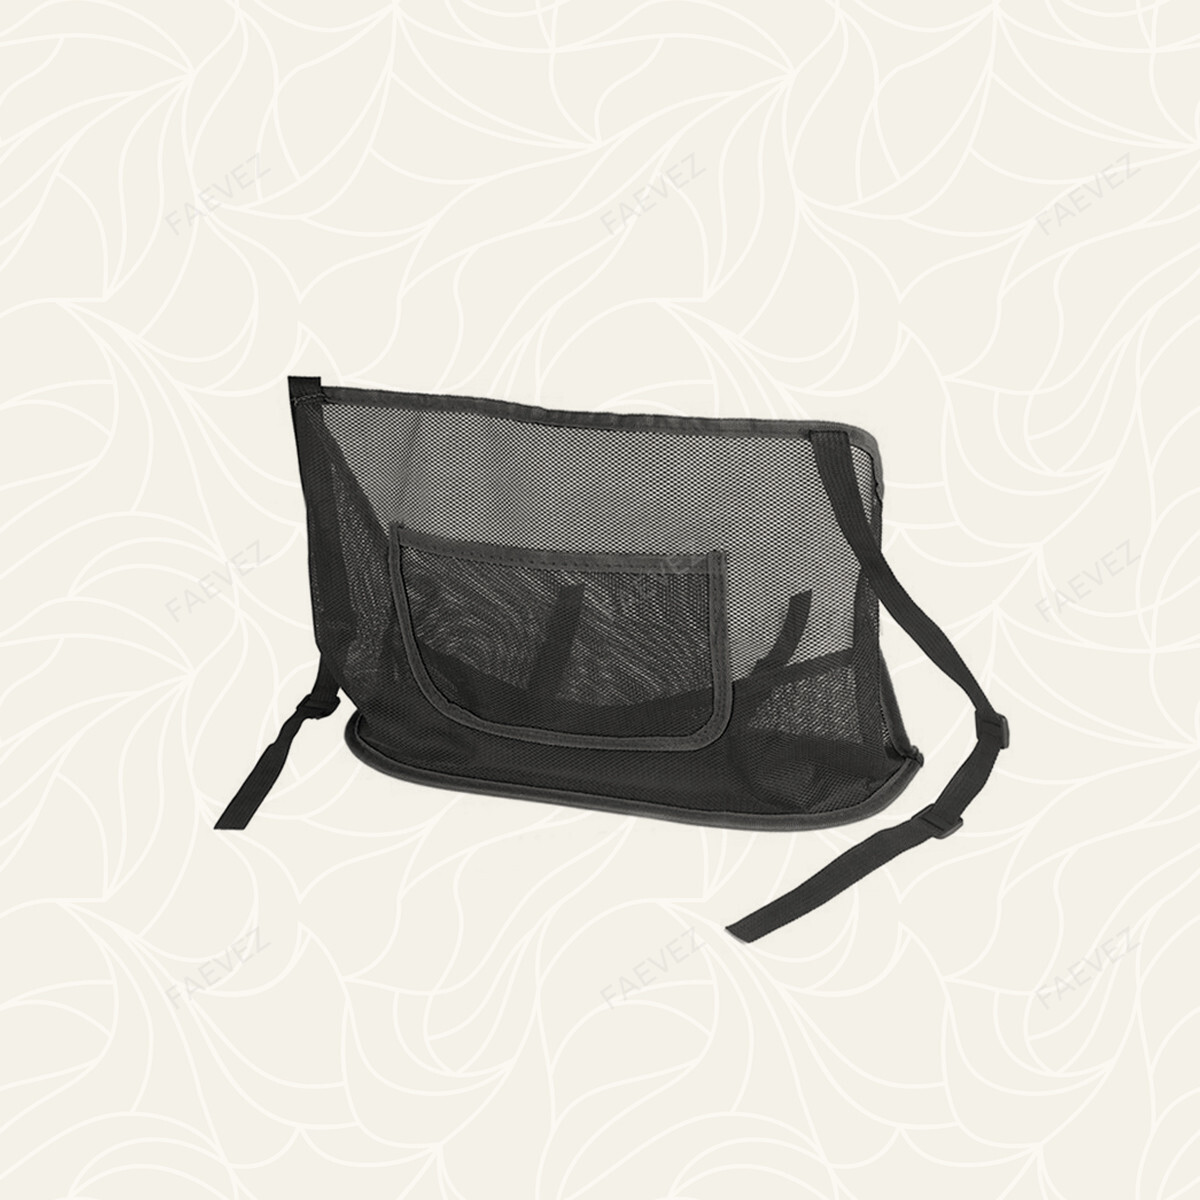 Carnet Bag Car Net Pocket Handbag Holder